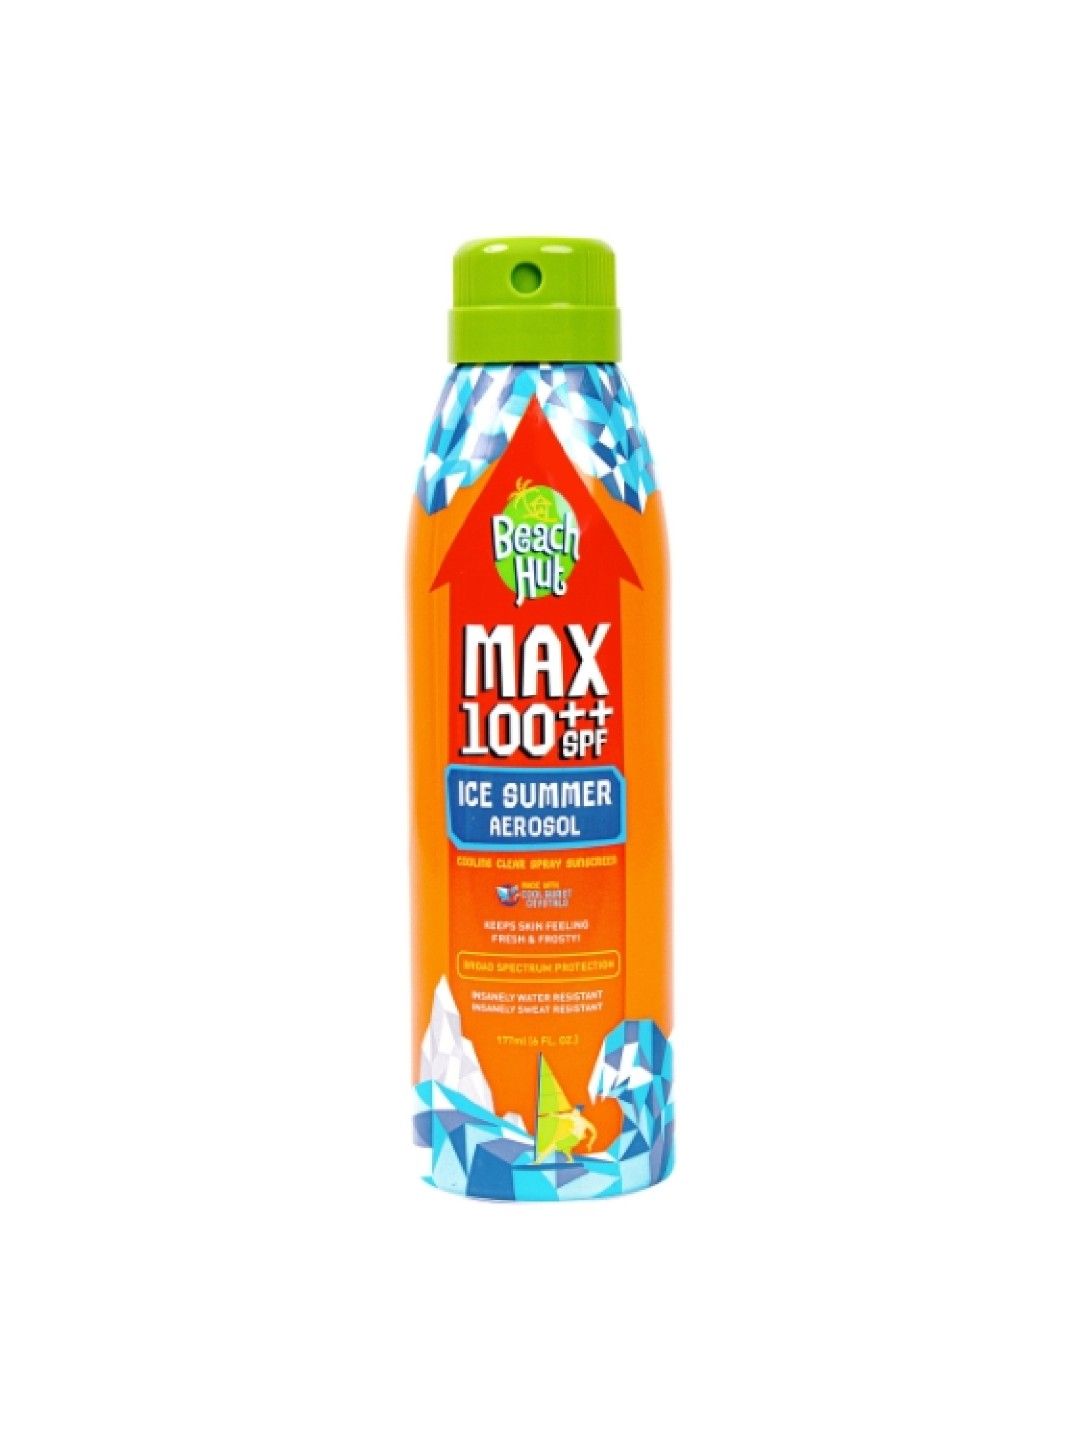 Beach Hut Max 100++ SPF Ice Summer Aerosol Sunscreen Spray (177ml)